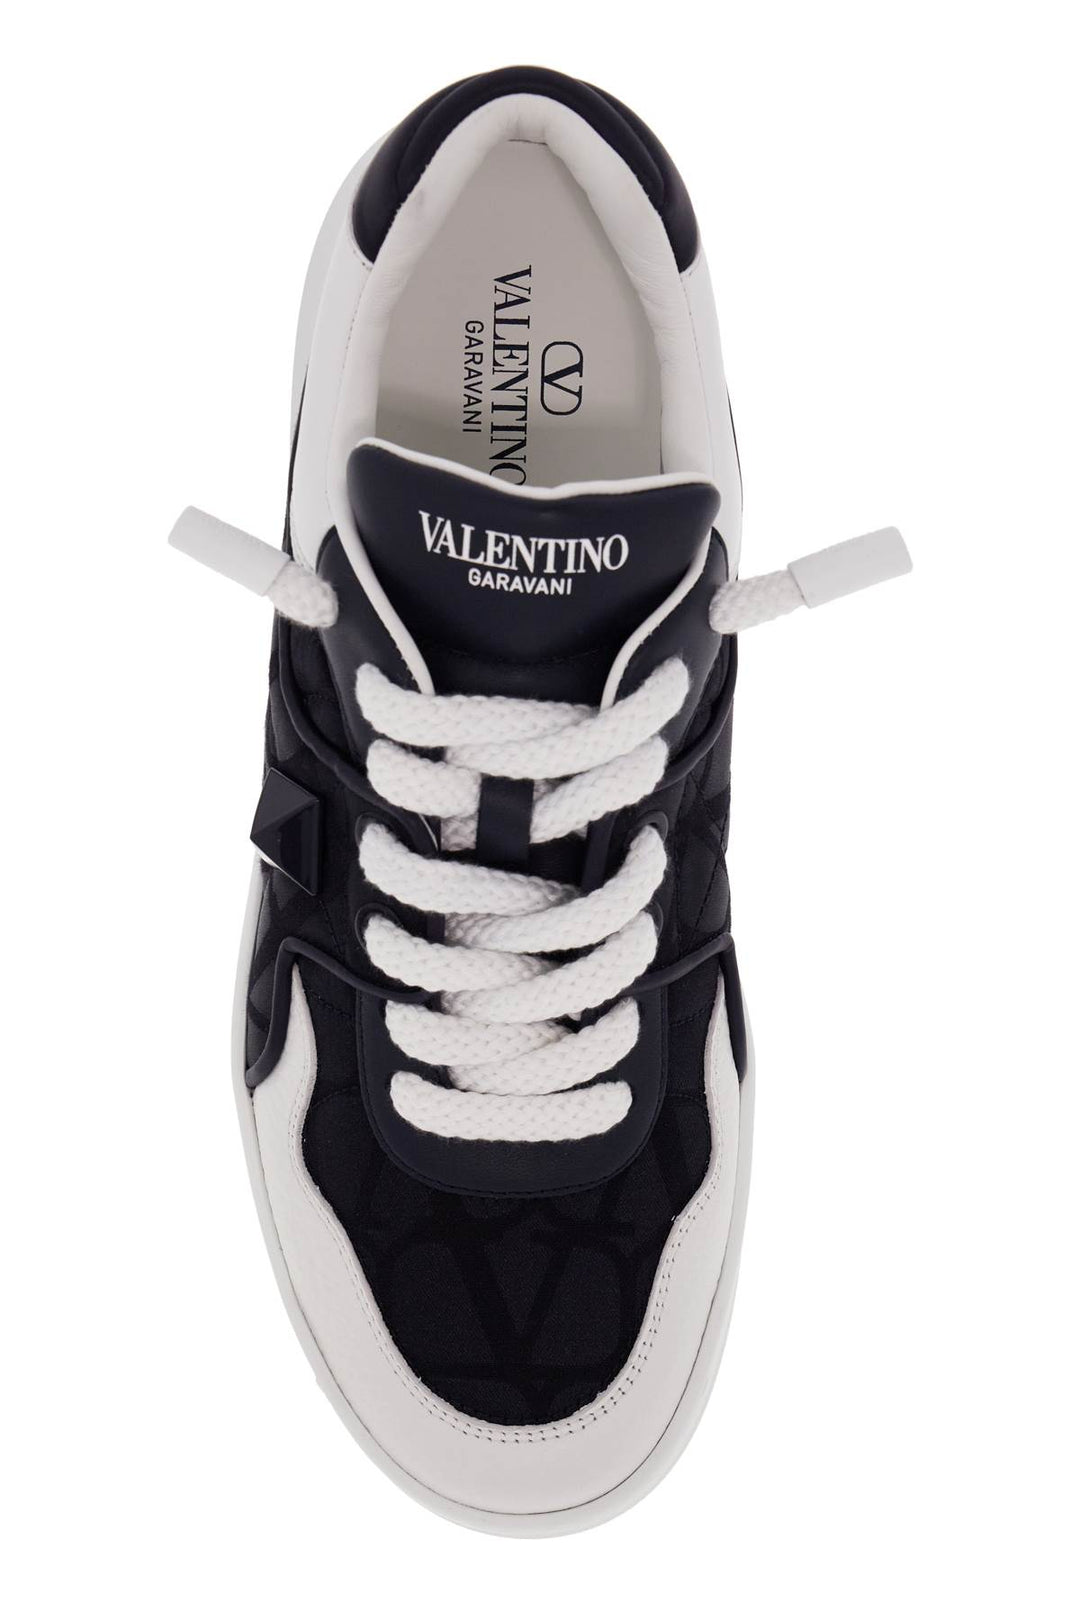 Valentino Garavani One Stud Xl Low Top Sneakers   Blue